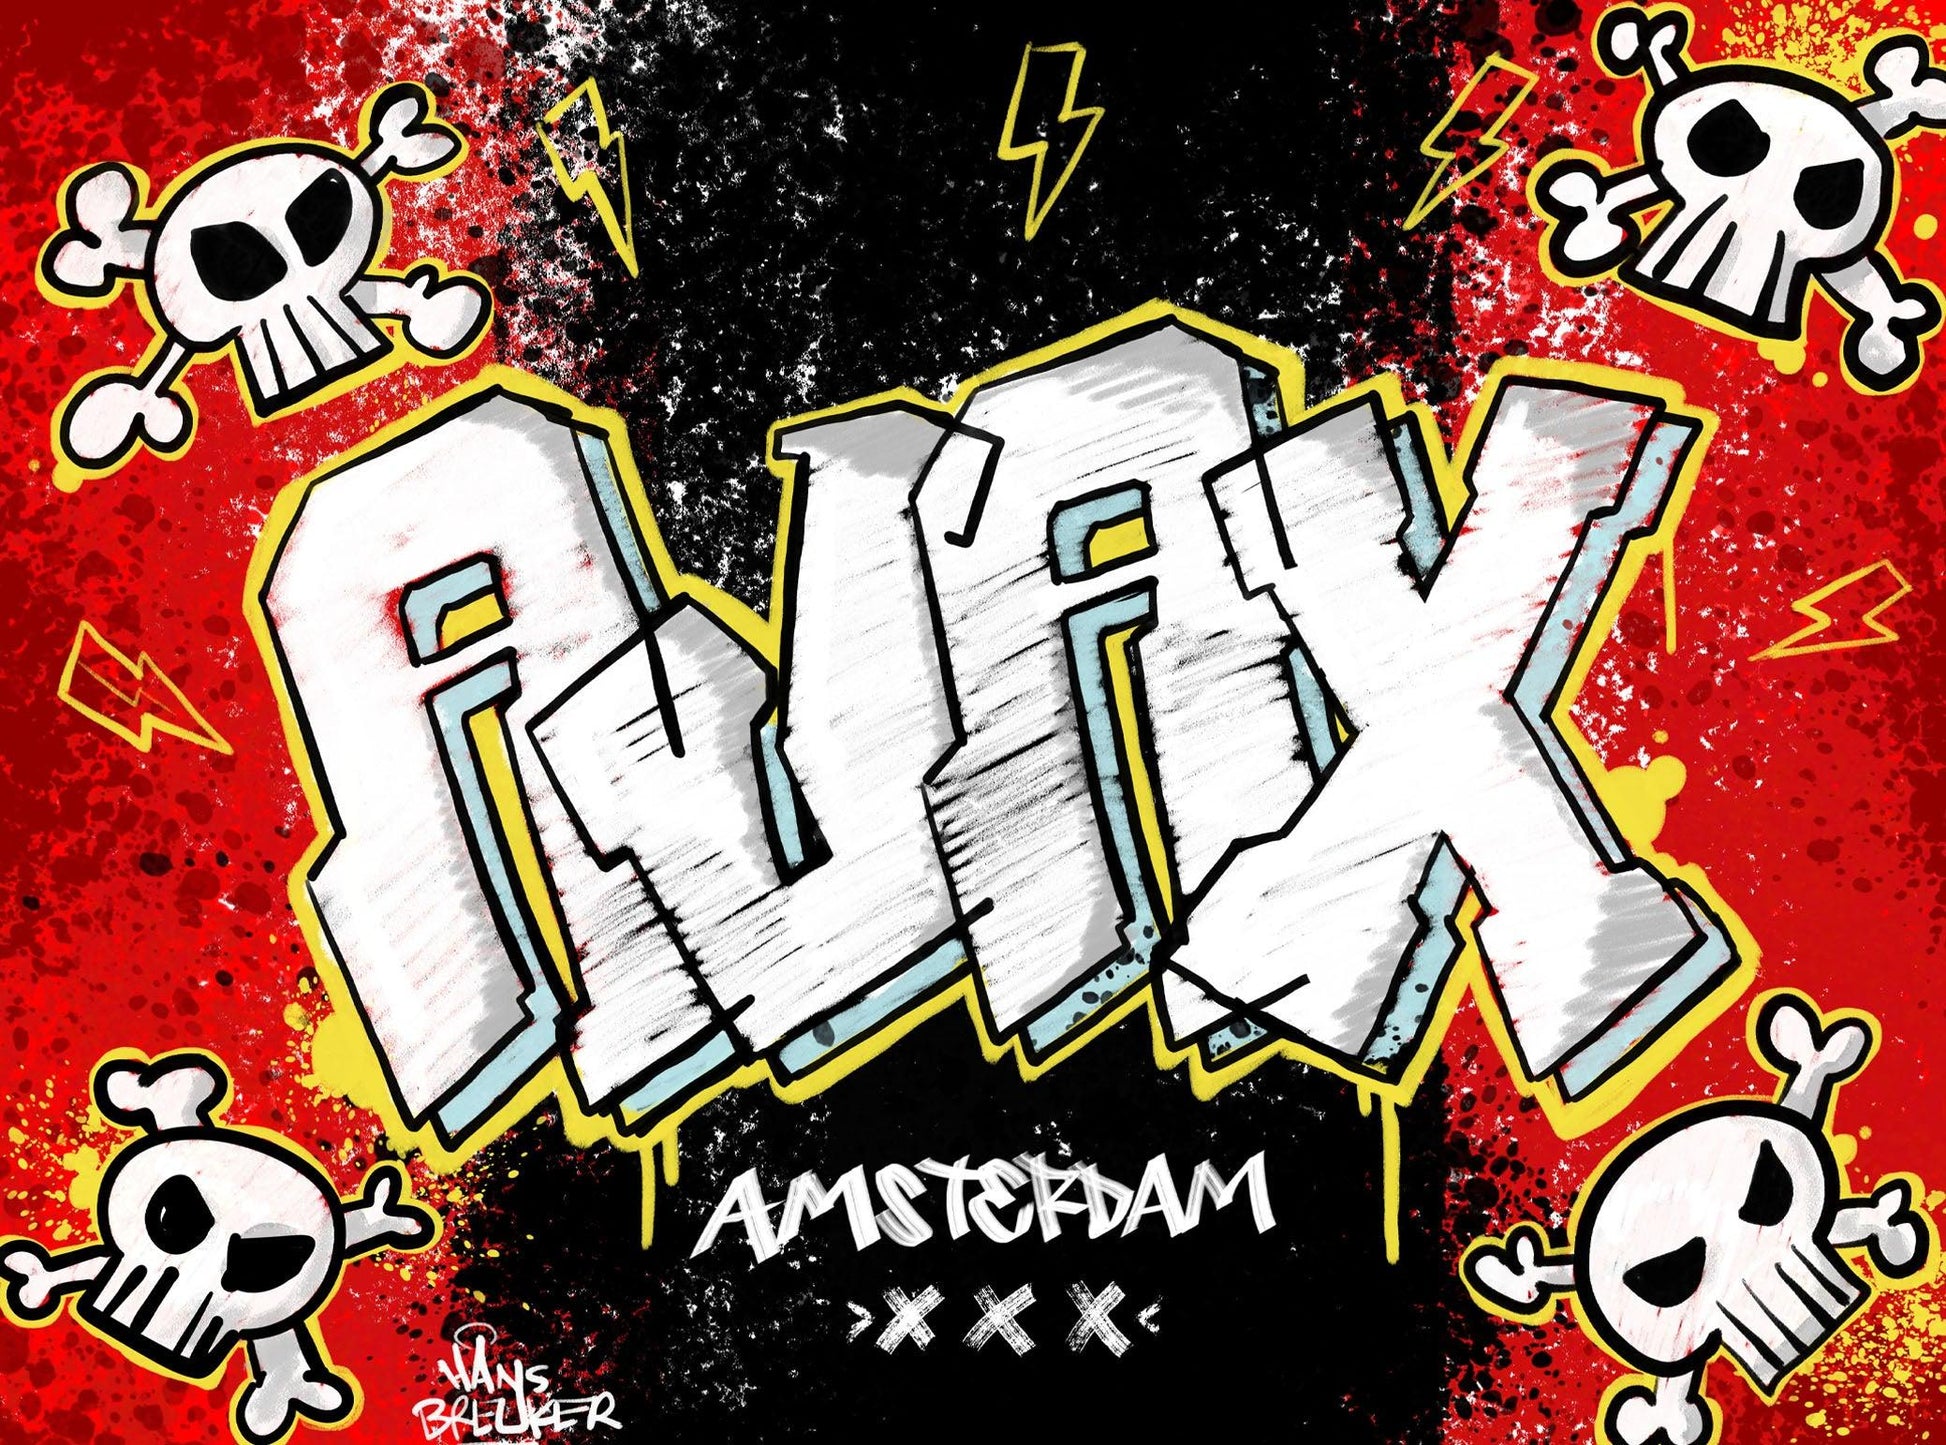 Amsterdam Ajax Graffiti - Hans Breuker